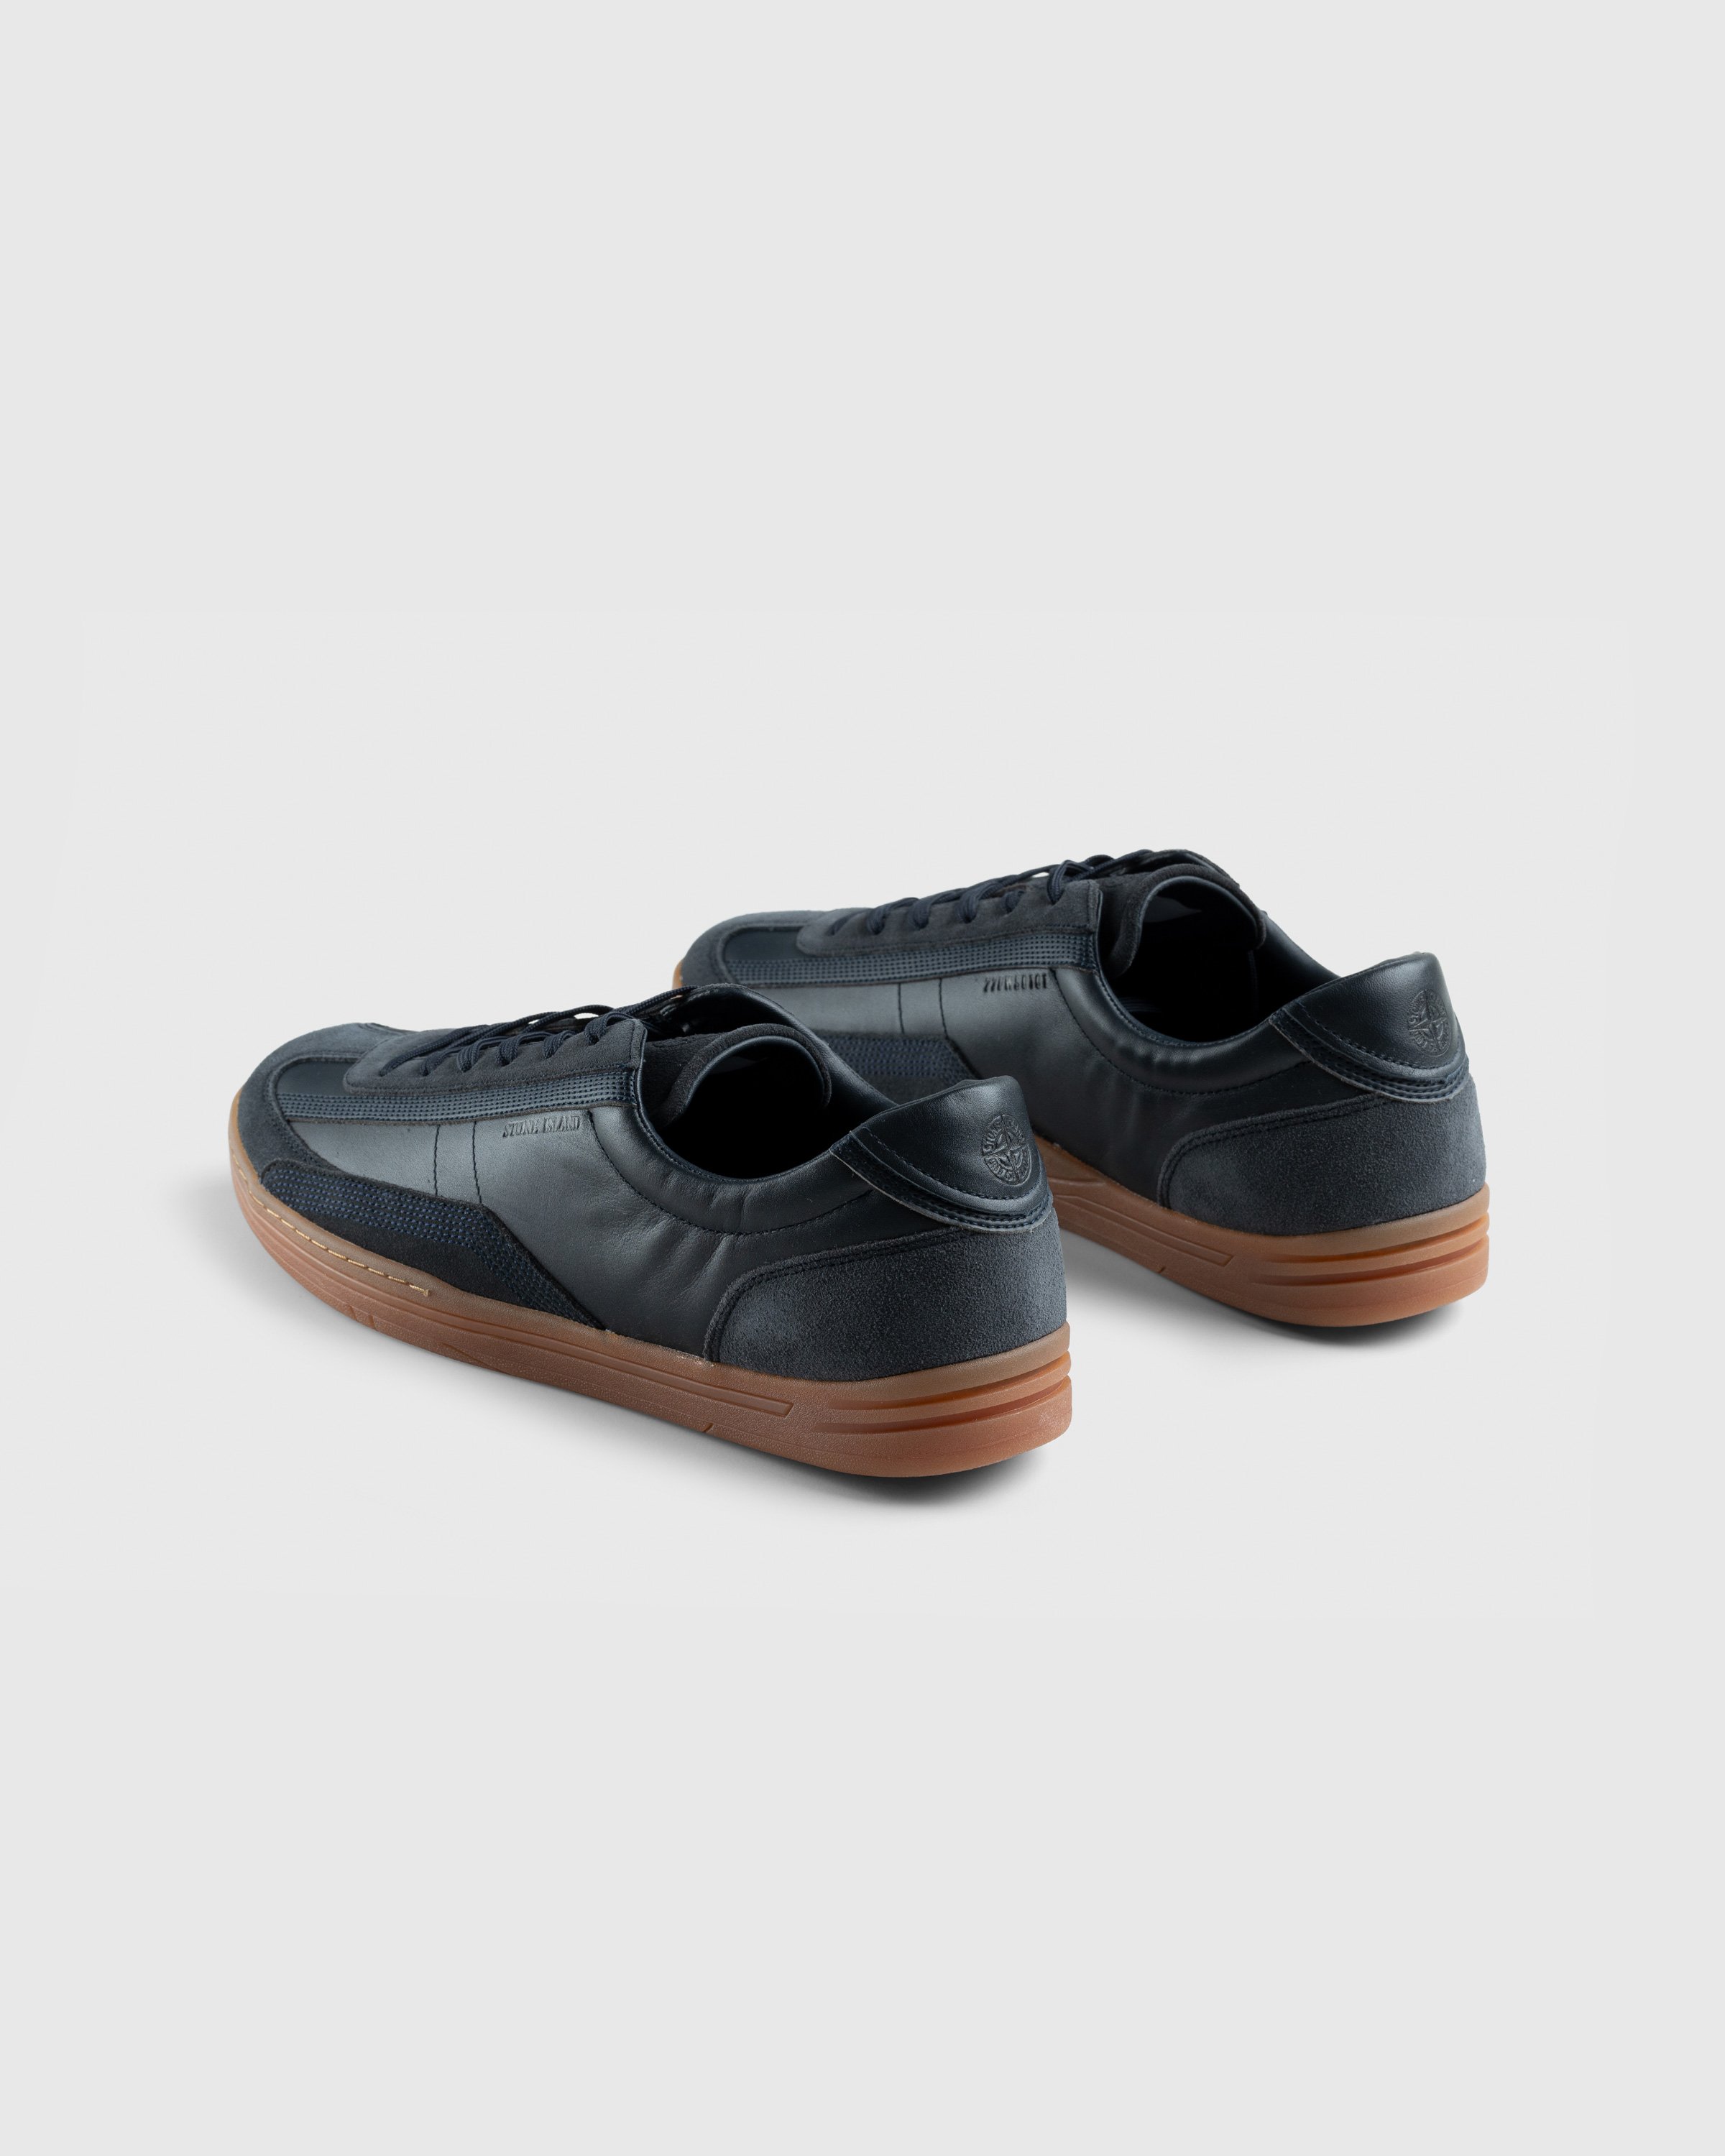 Stone Island - Rock Sneaker Black - Footwear - Black - Image 4